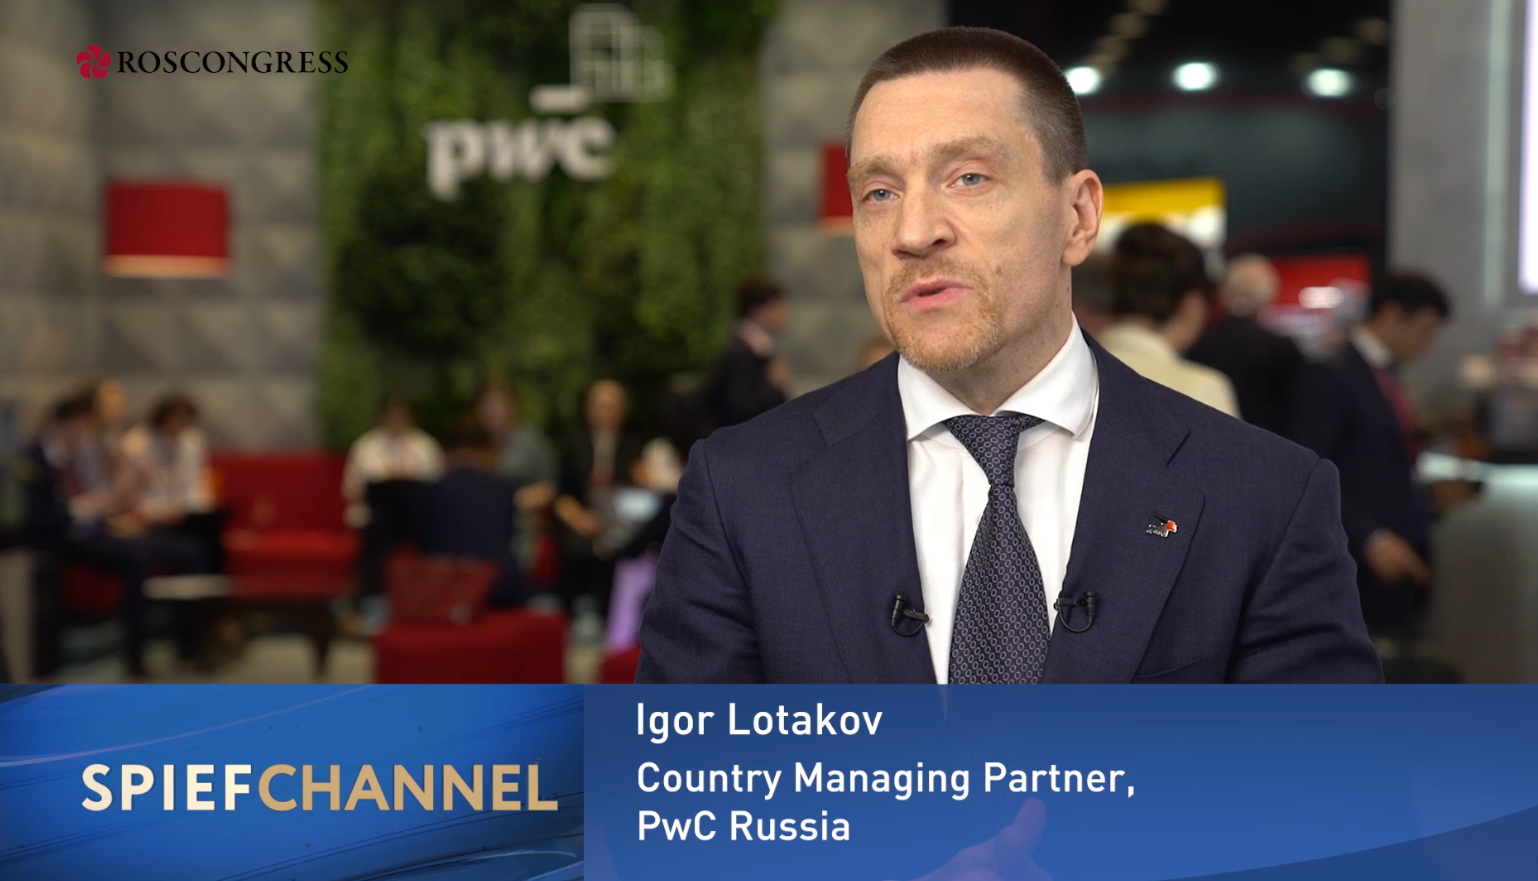 Igor Lotakov, Country Managing Partner, PwC Russia